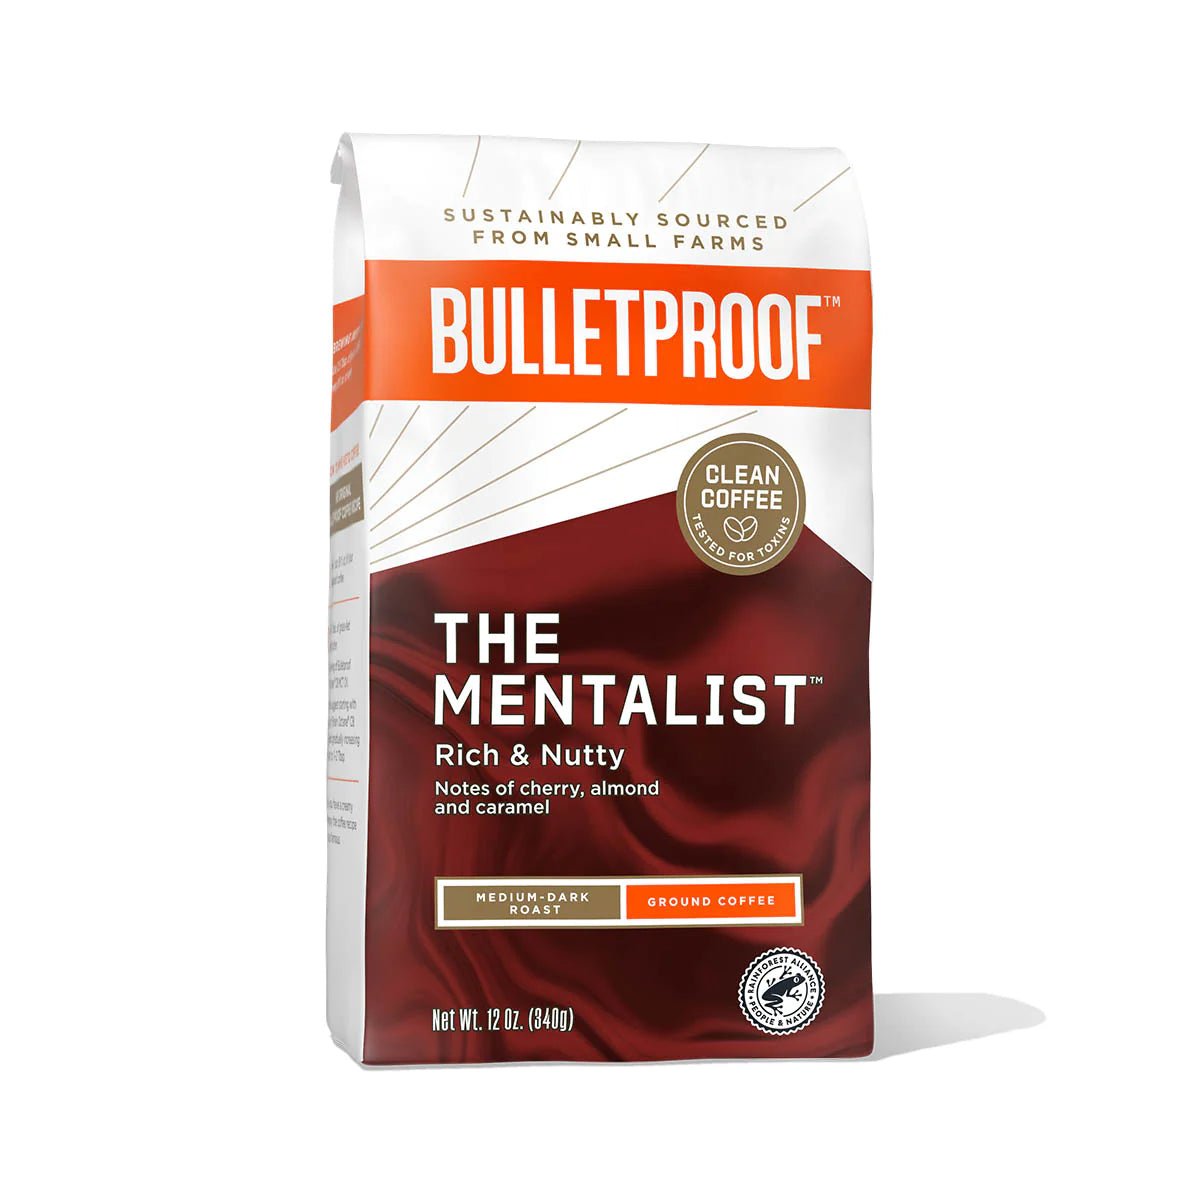 Bulletproof ザ・メンタリスト、ミディアムダークロースト 340g GROUND COFFEE THE MENTALIST, MEDIUM-DARK ROAST - HAPIVERI